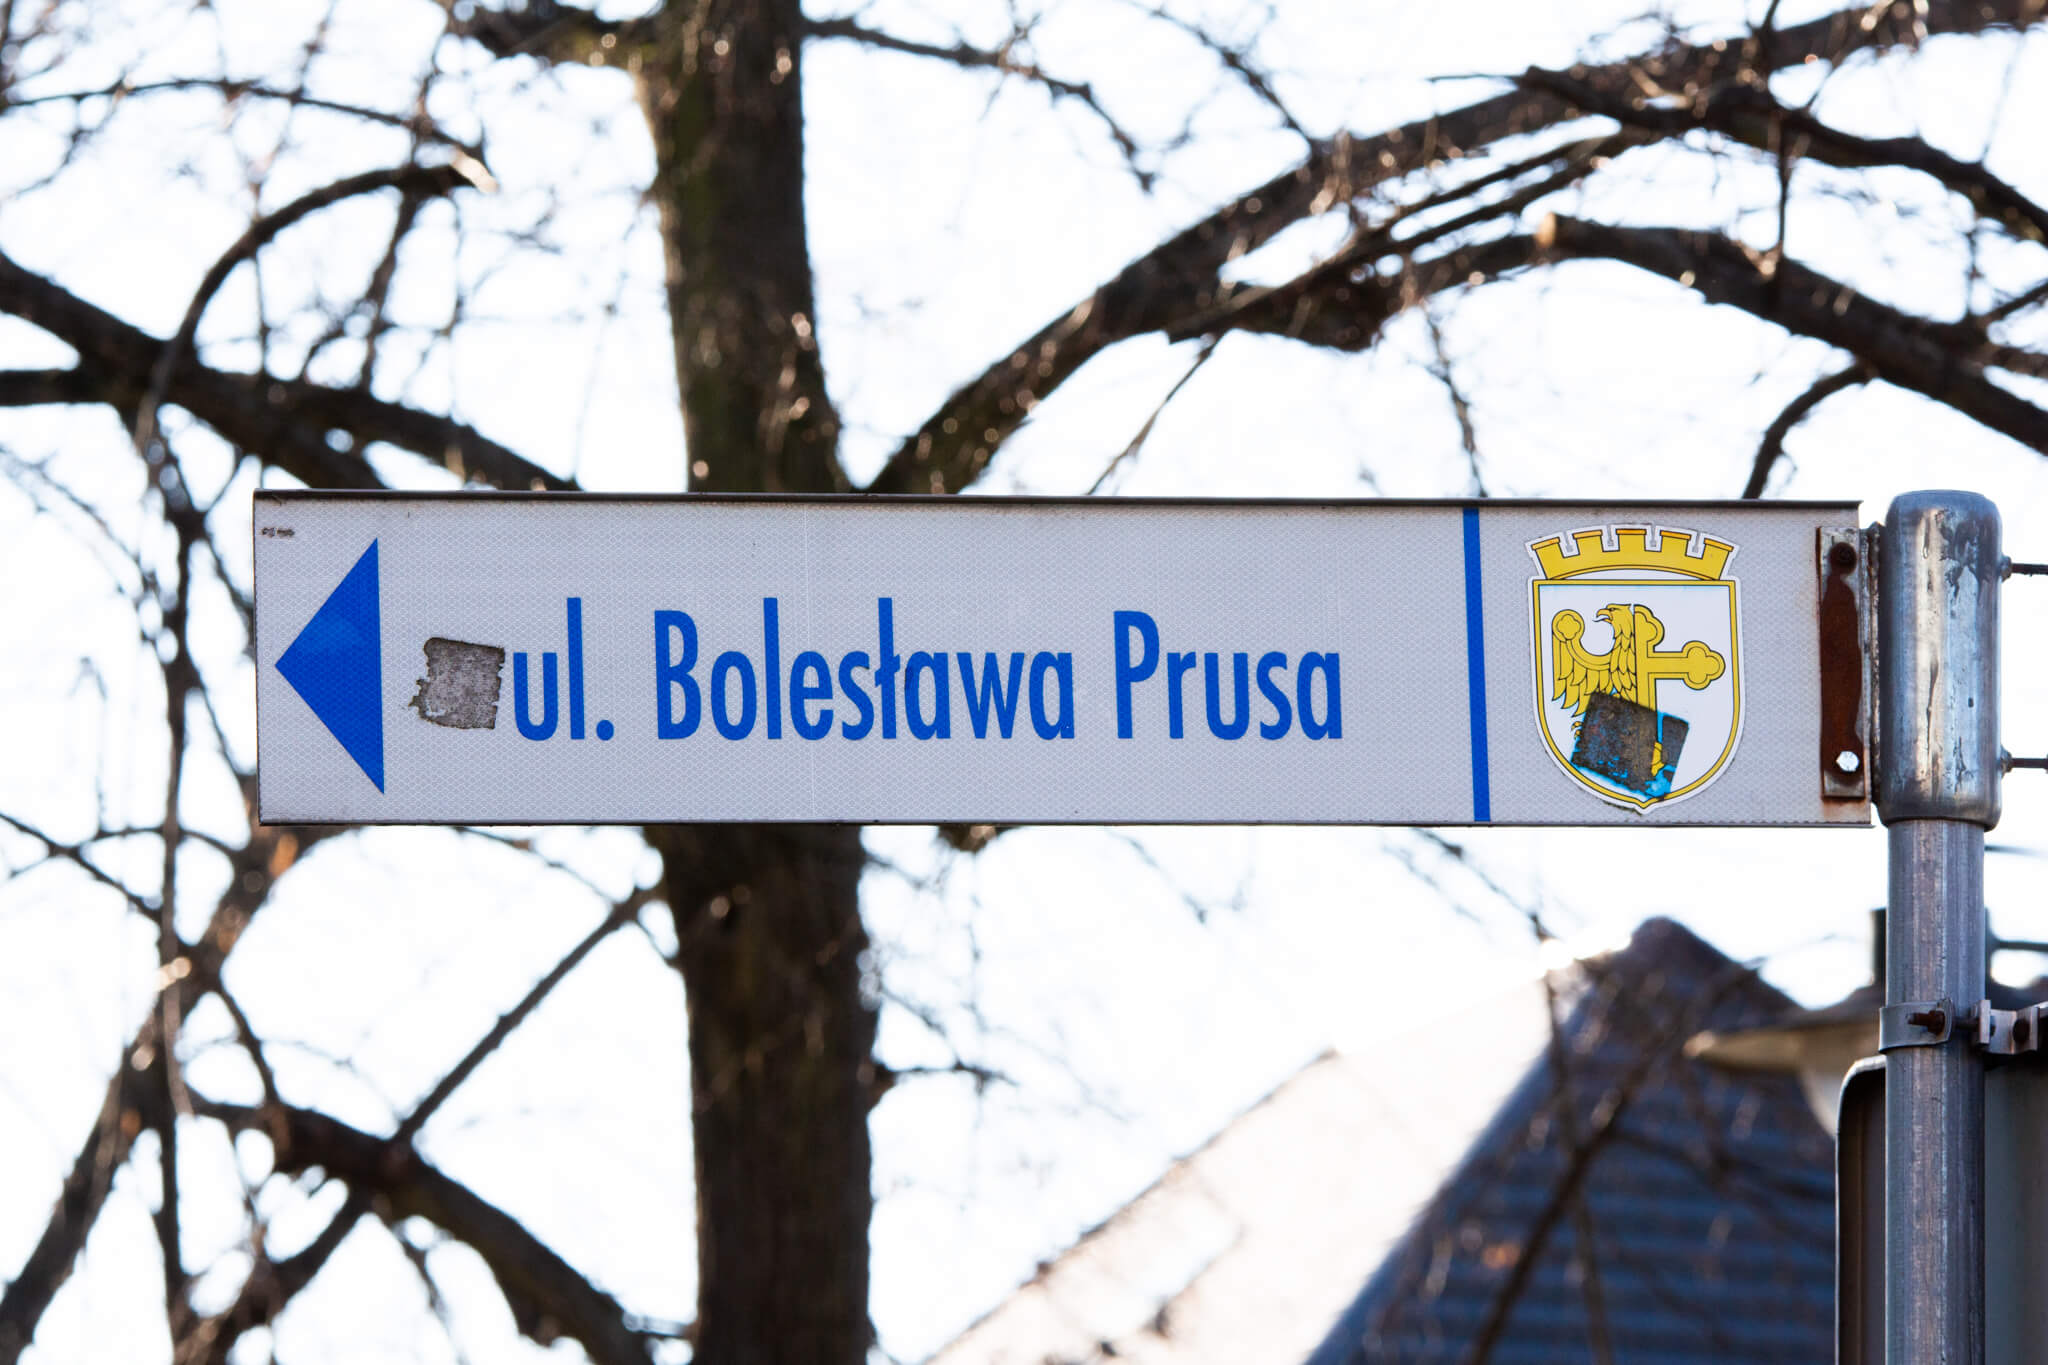 Ulica Bolesław Prusa